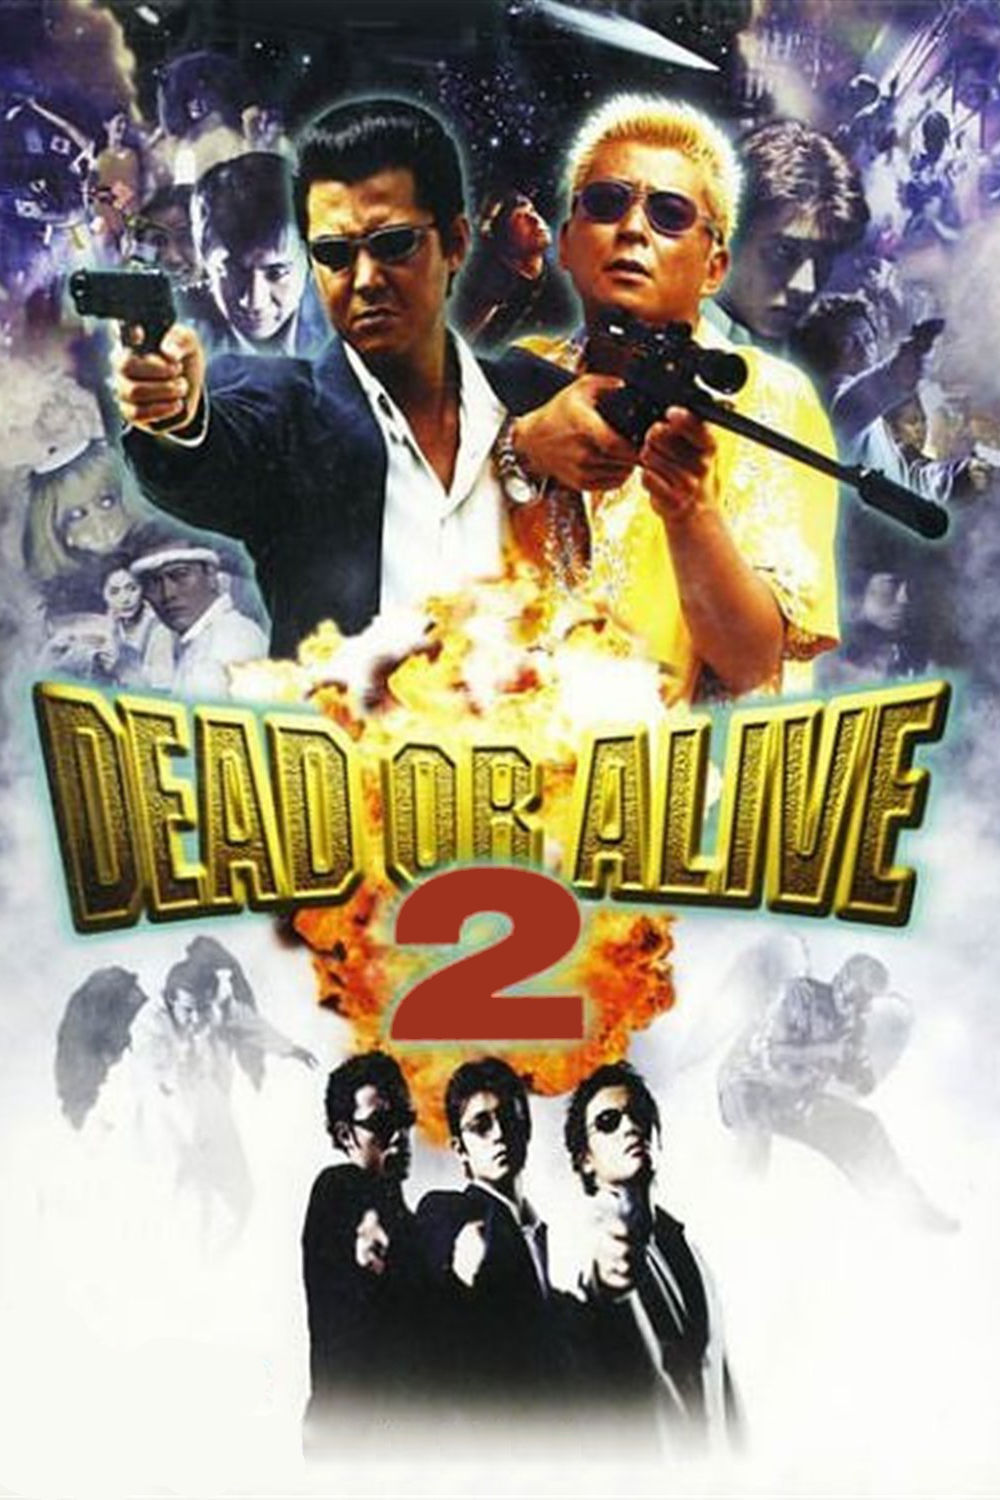 Pennsylvasia Takashi Miike S Dead Or Alive 犯罪者 Trilogy At Melwood Screening Room August 31 September 3